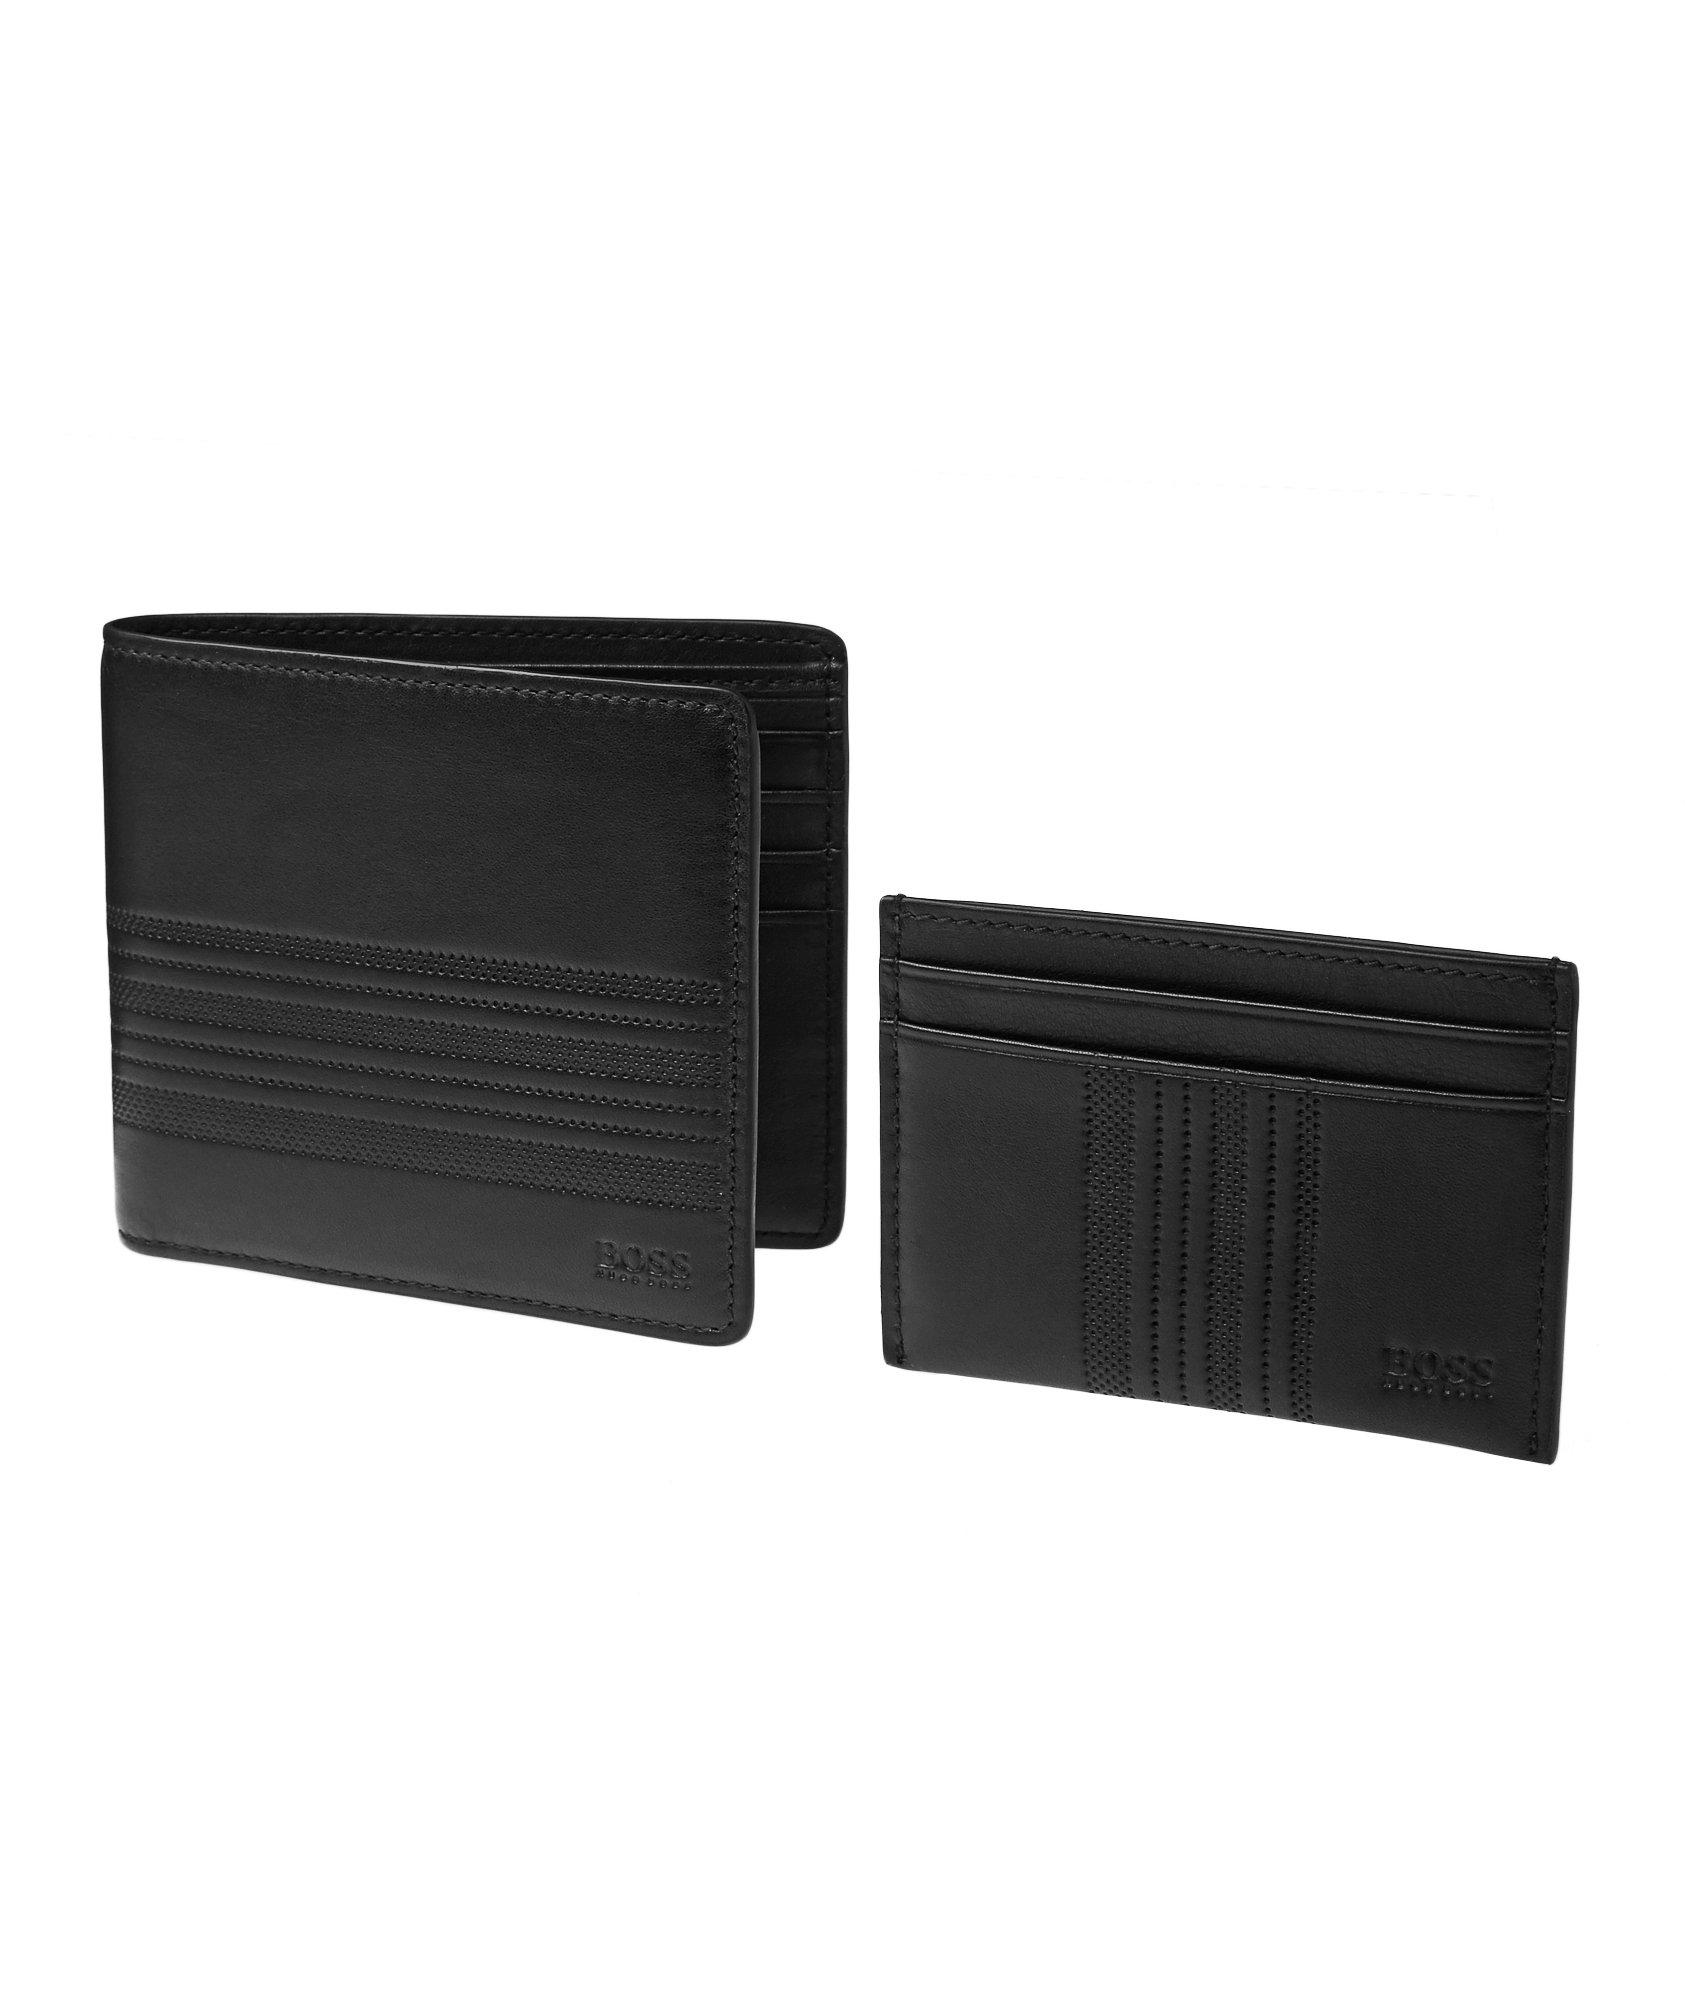 Leather Bifold Wallet and Cardholder Set image 0